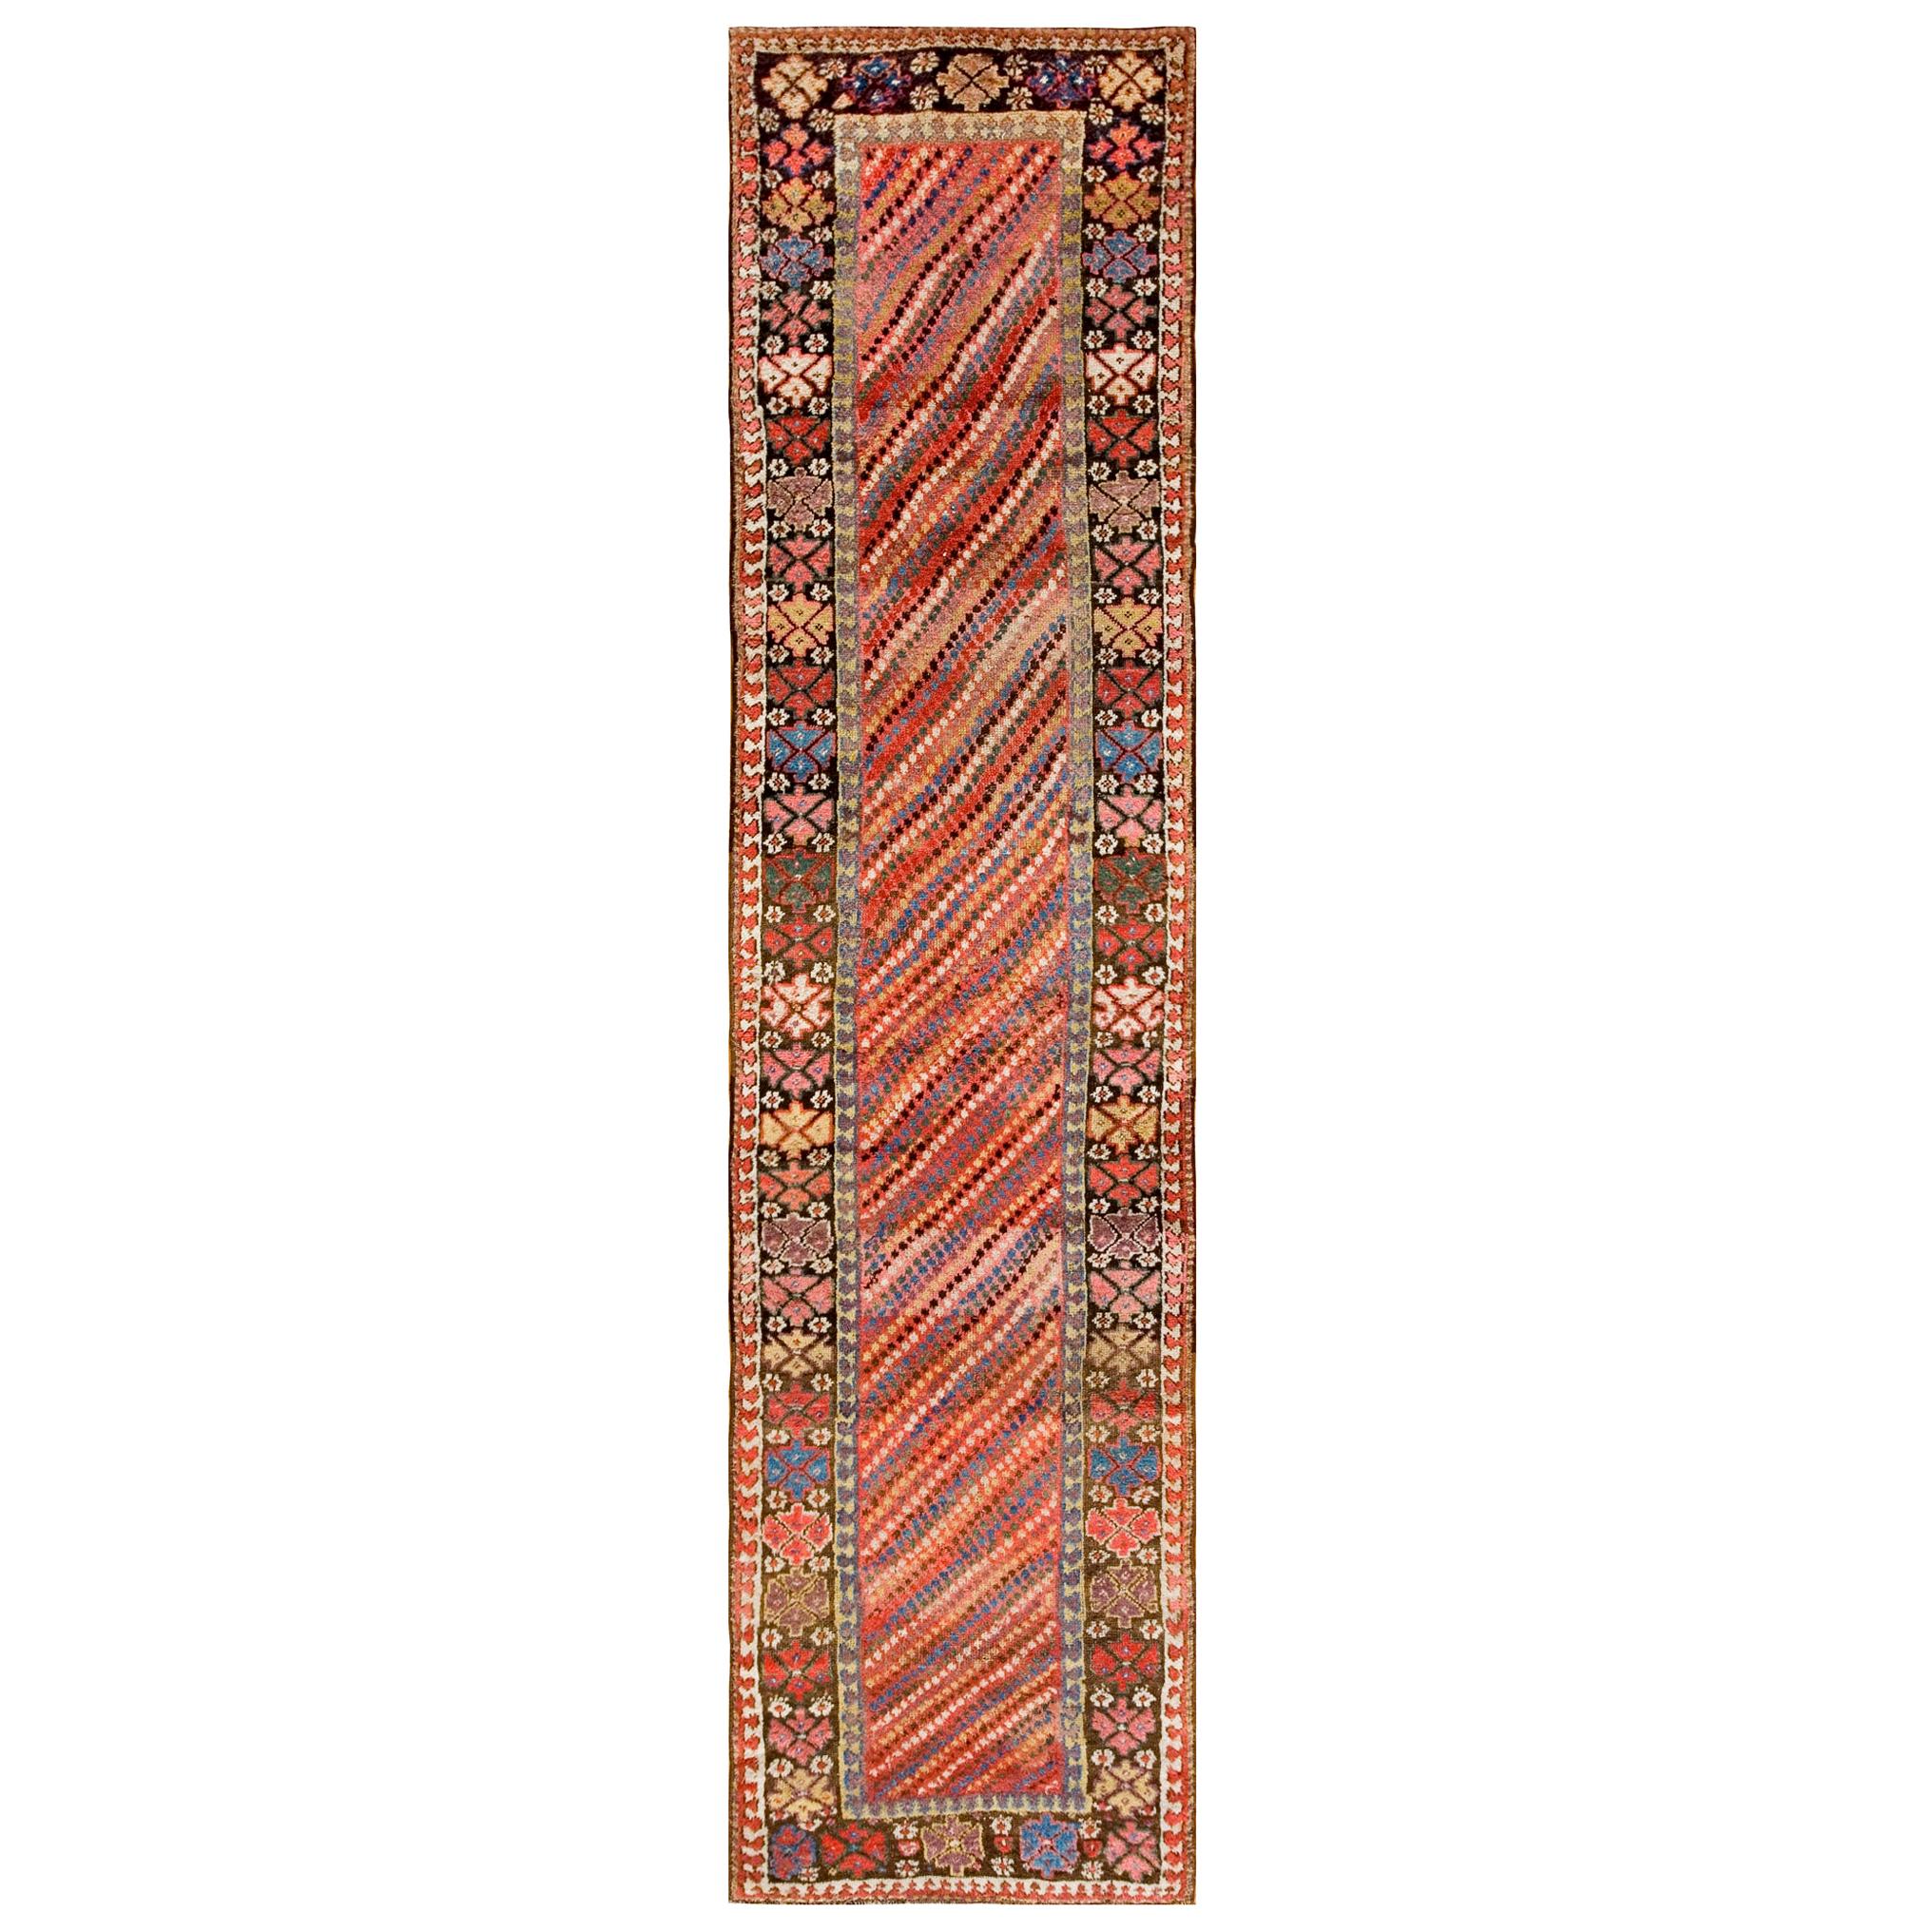 19th Century W. Persian Kurdish Carpet ( 3'3" x 12'4" - 99 x 376 ) For Sale